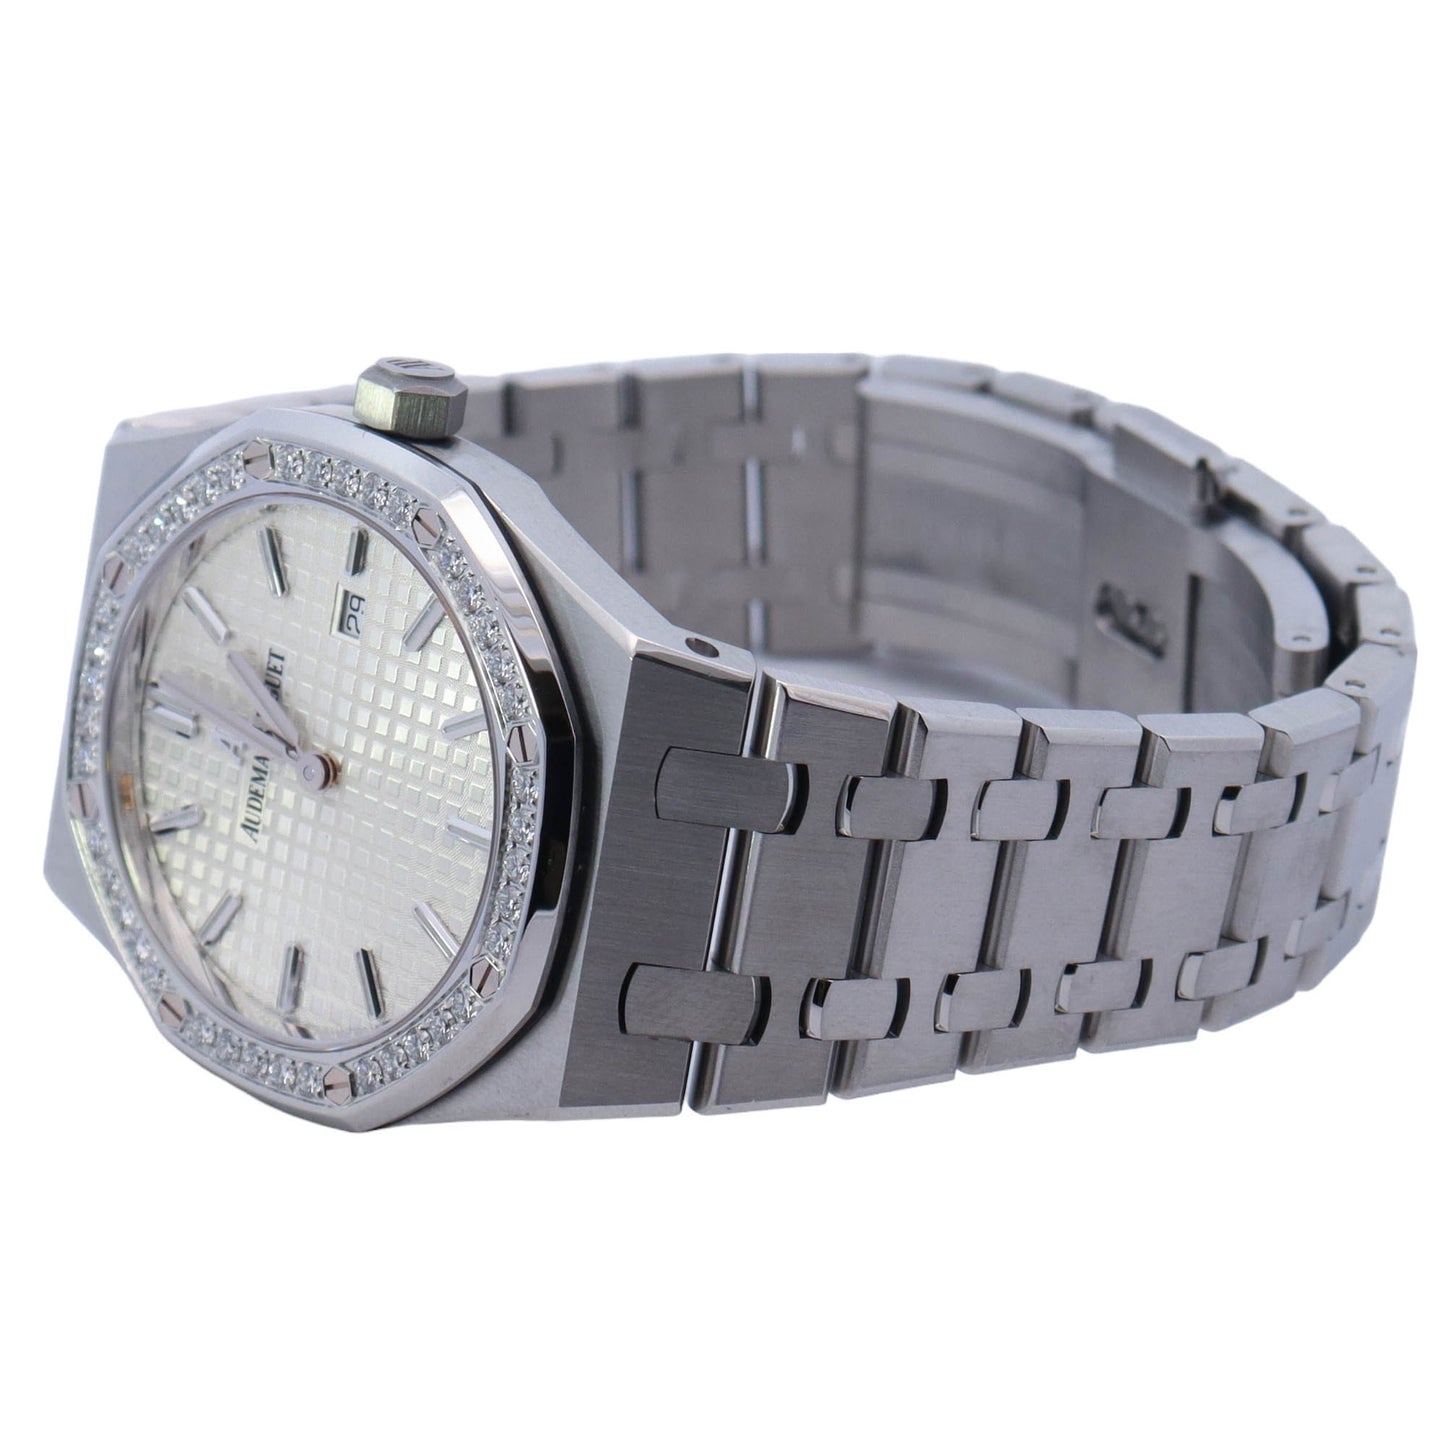 Audemars Piguet Royal Oak Stainless Steel 33mm White Stick Dial Watch Reference# 67651ST.ZZ.1261ST.01 - Happy Jewelers Fine Jewelry Lifetime Warranty